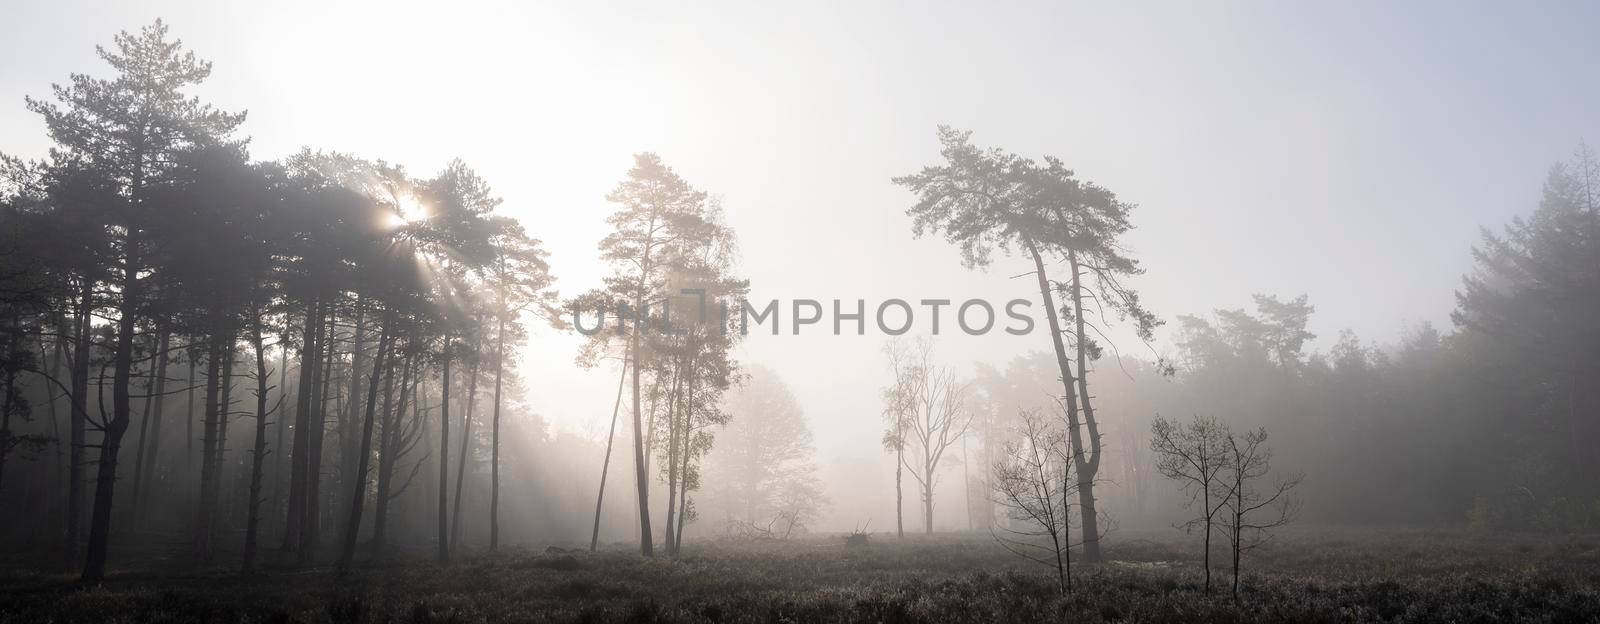 early morning sun rays in misty forest near utrecht in the netherlands by ahavelaar